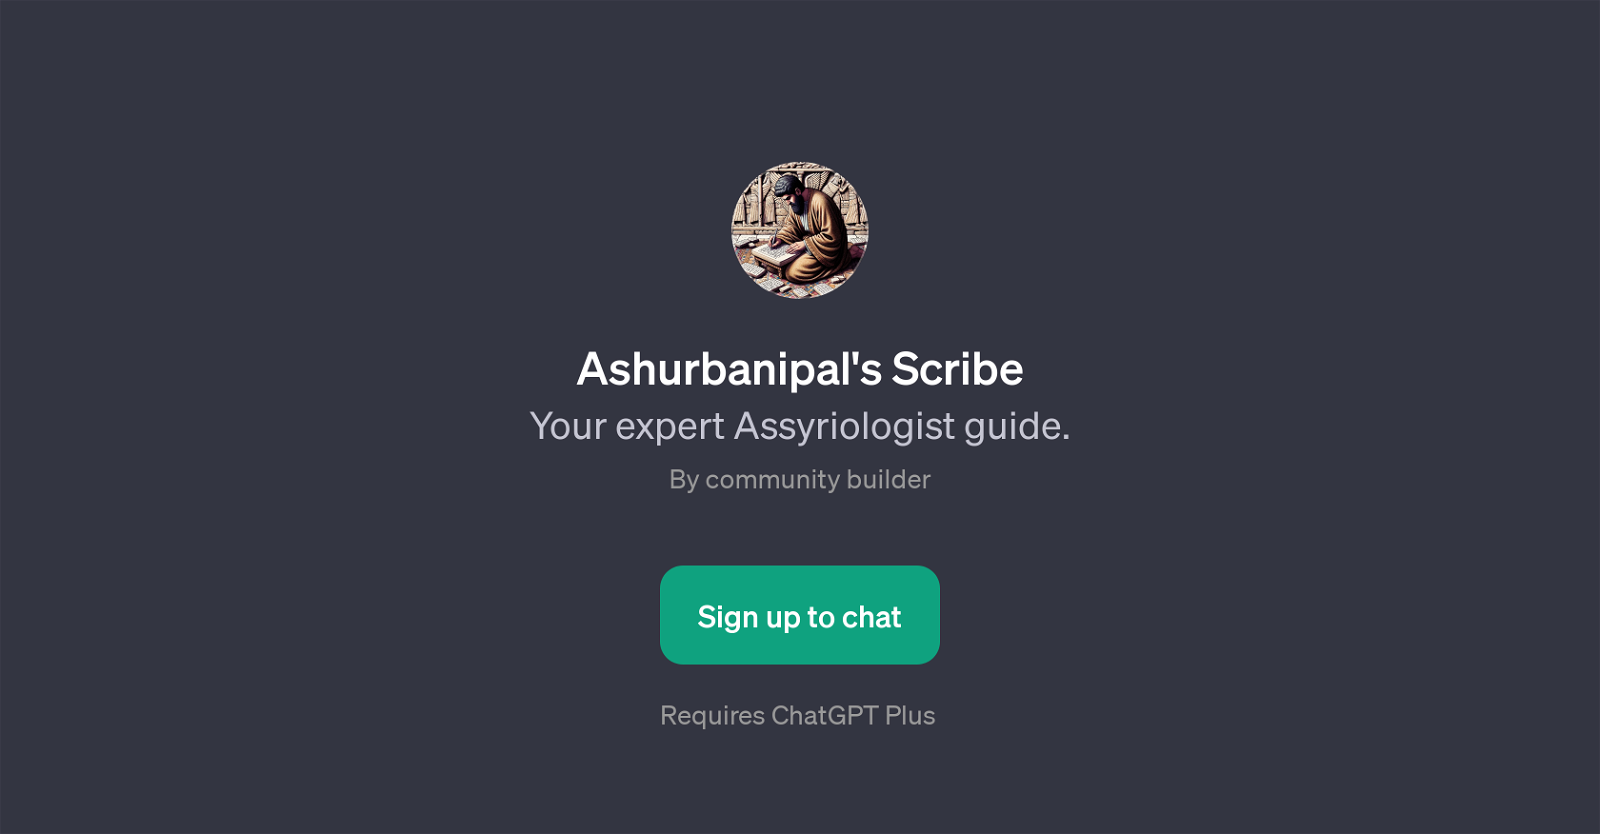 Ashurbanipal's Scribe website